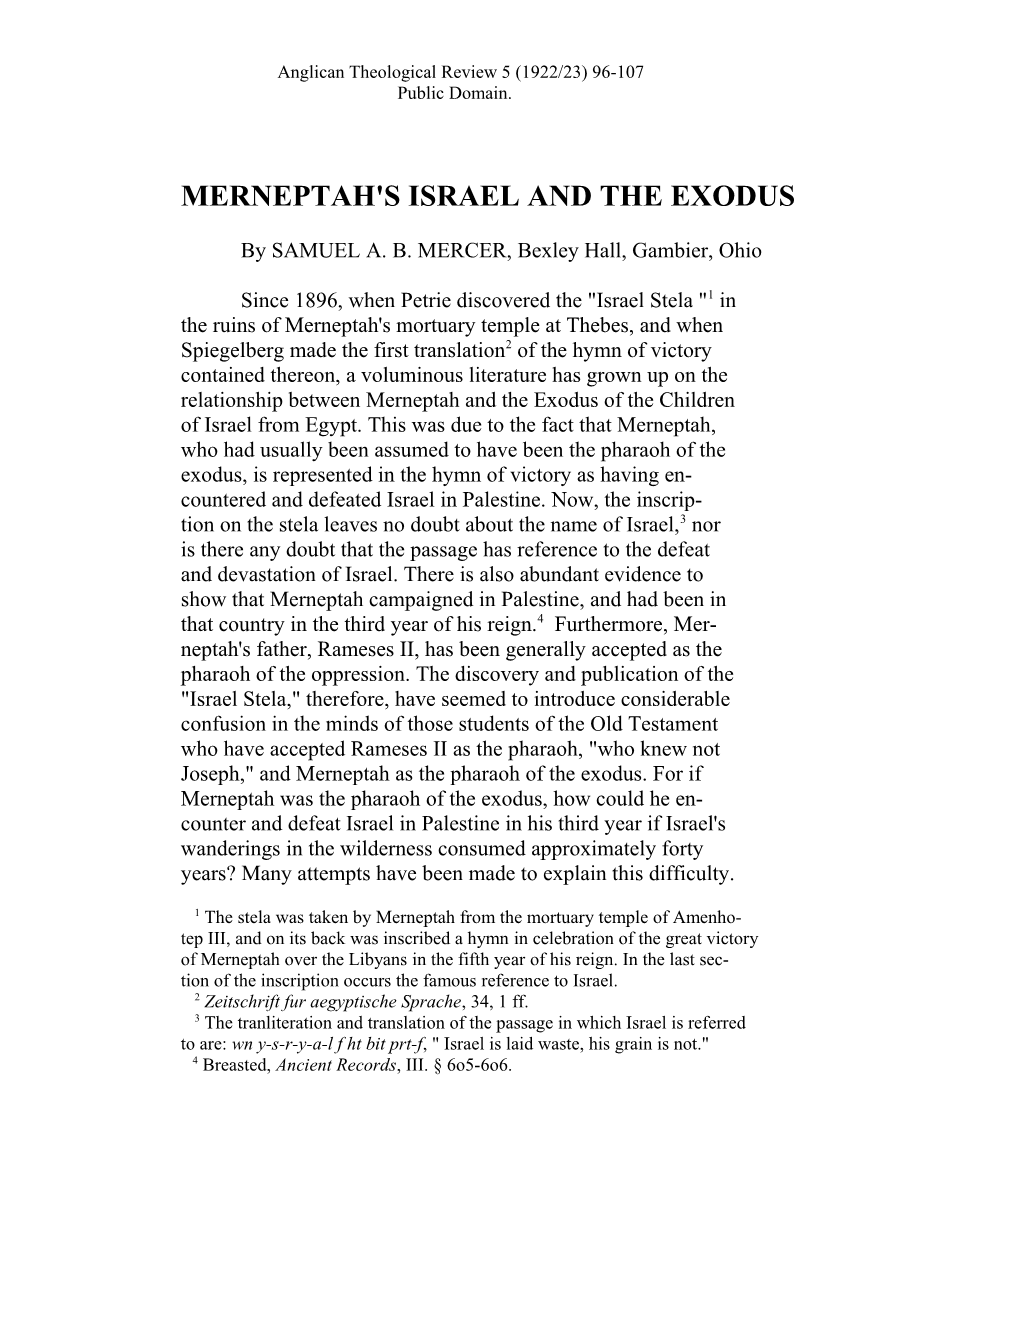 Merneptah's Israel and the Exodus